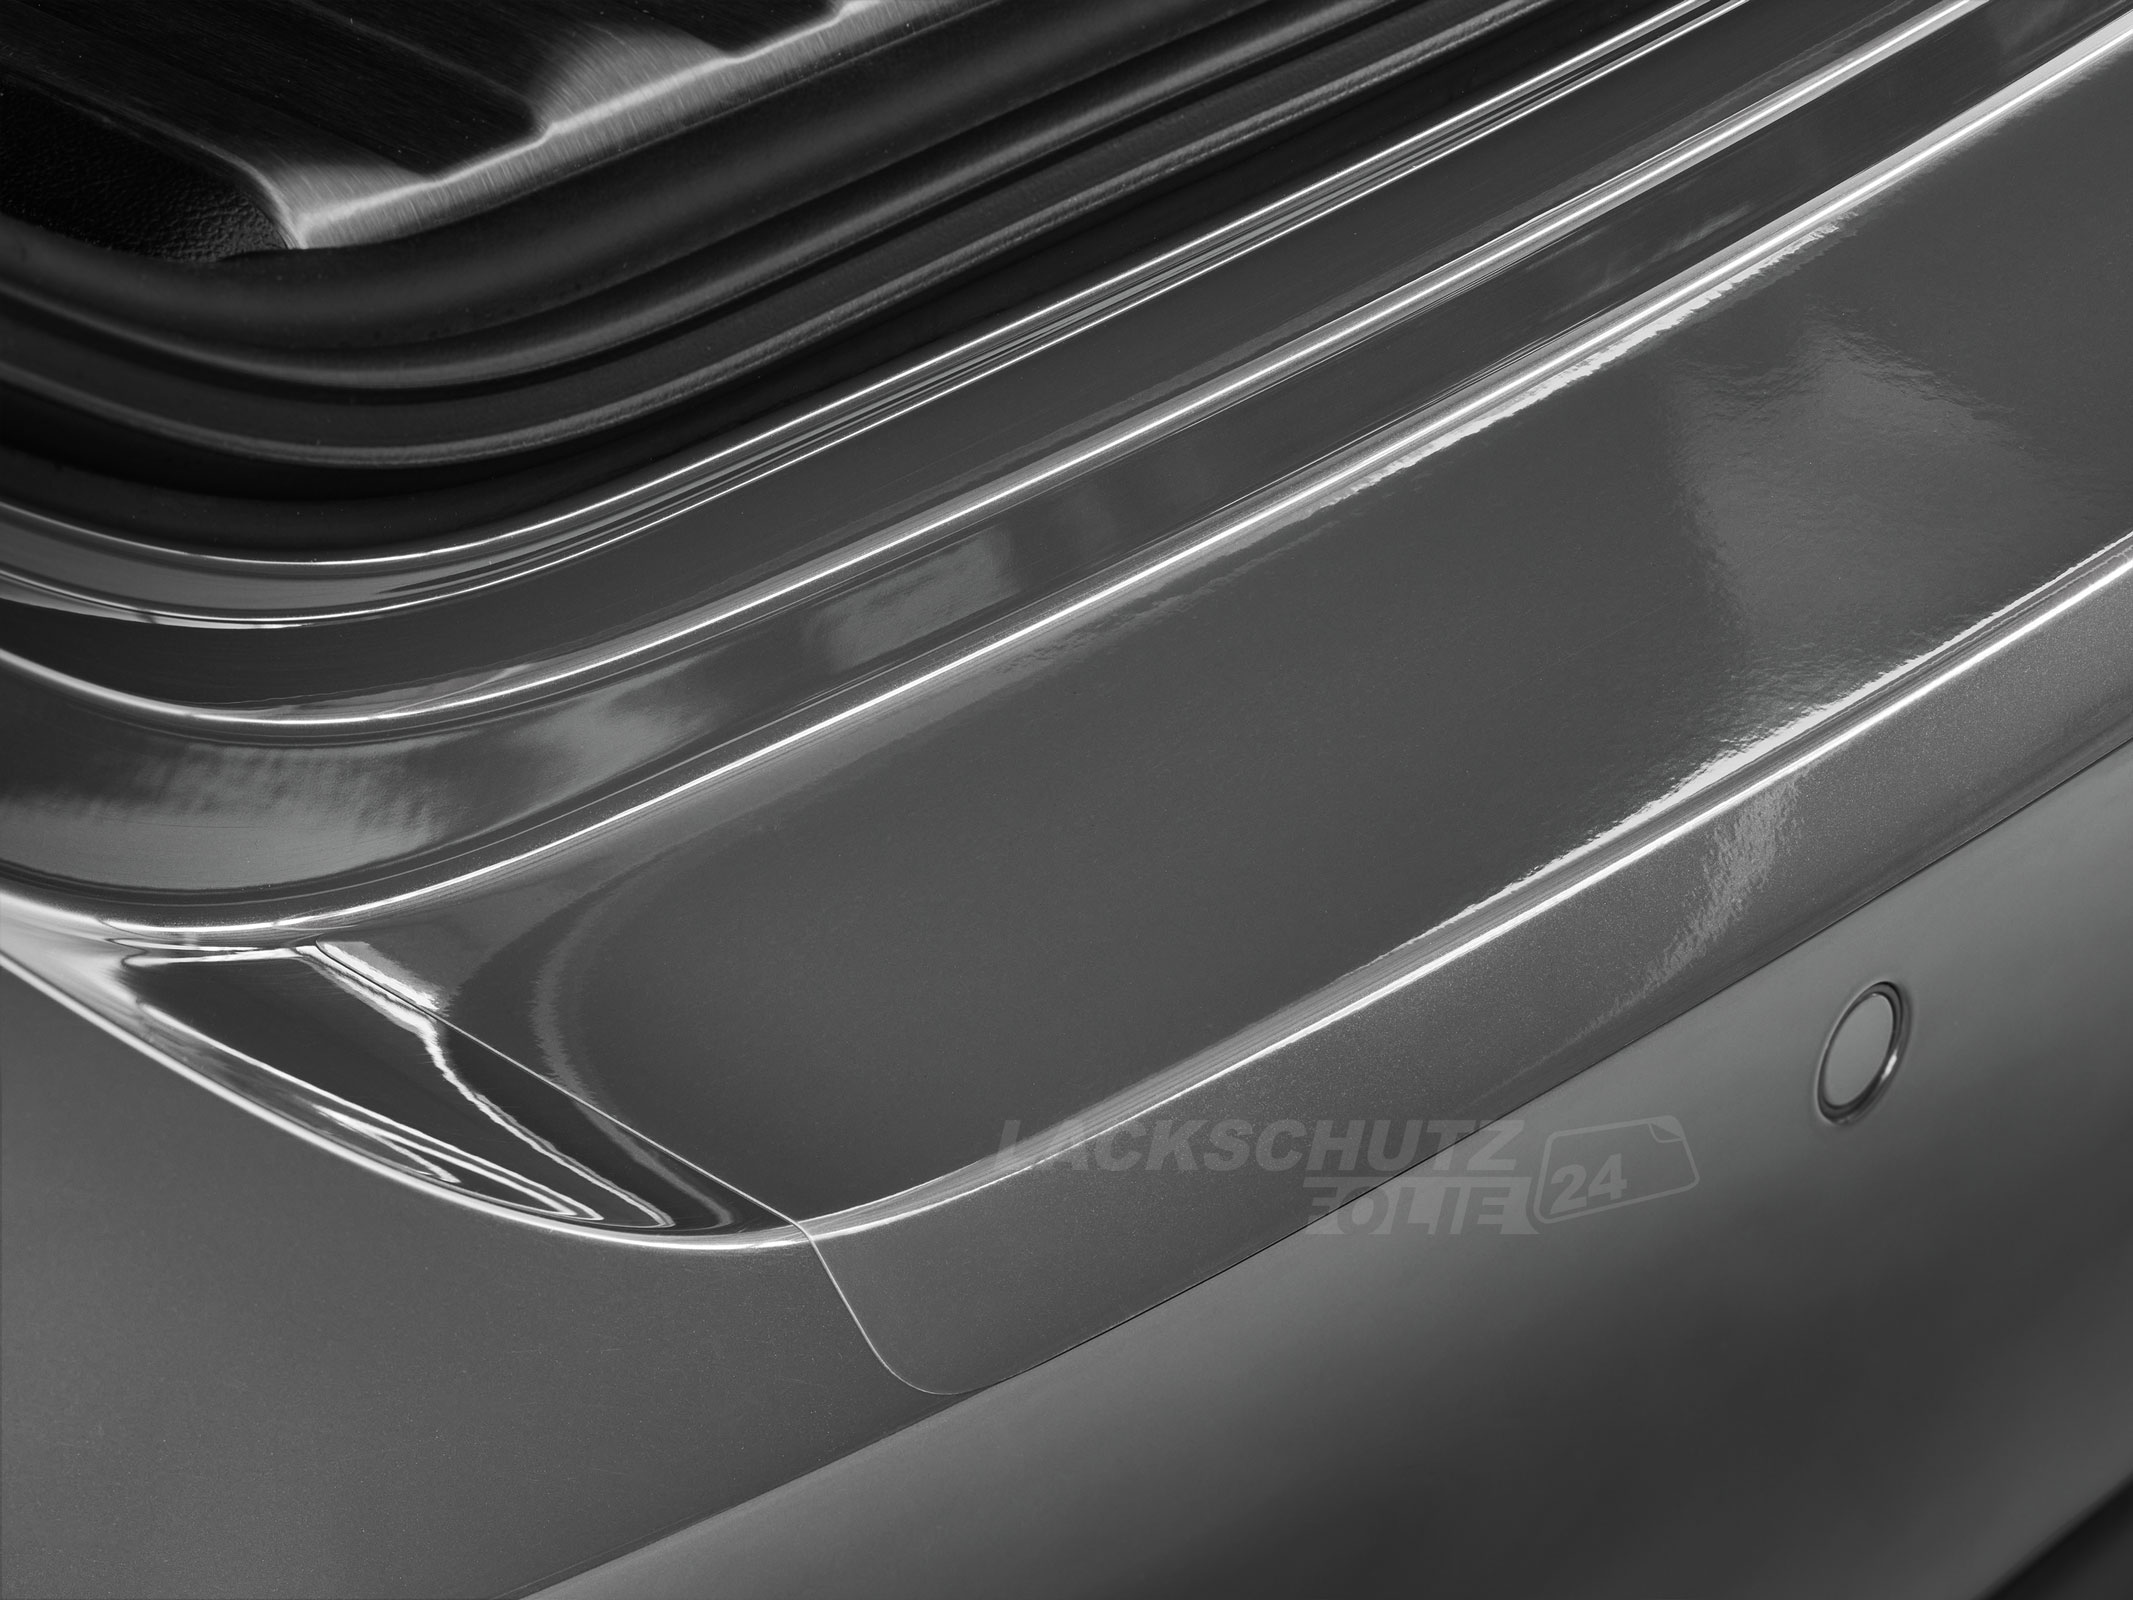 Ladekantenschutzfolie - Transparent Glatt Hochglänzend 150 µm stark für Nissan Evalia ab BJ 2011